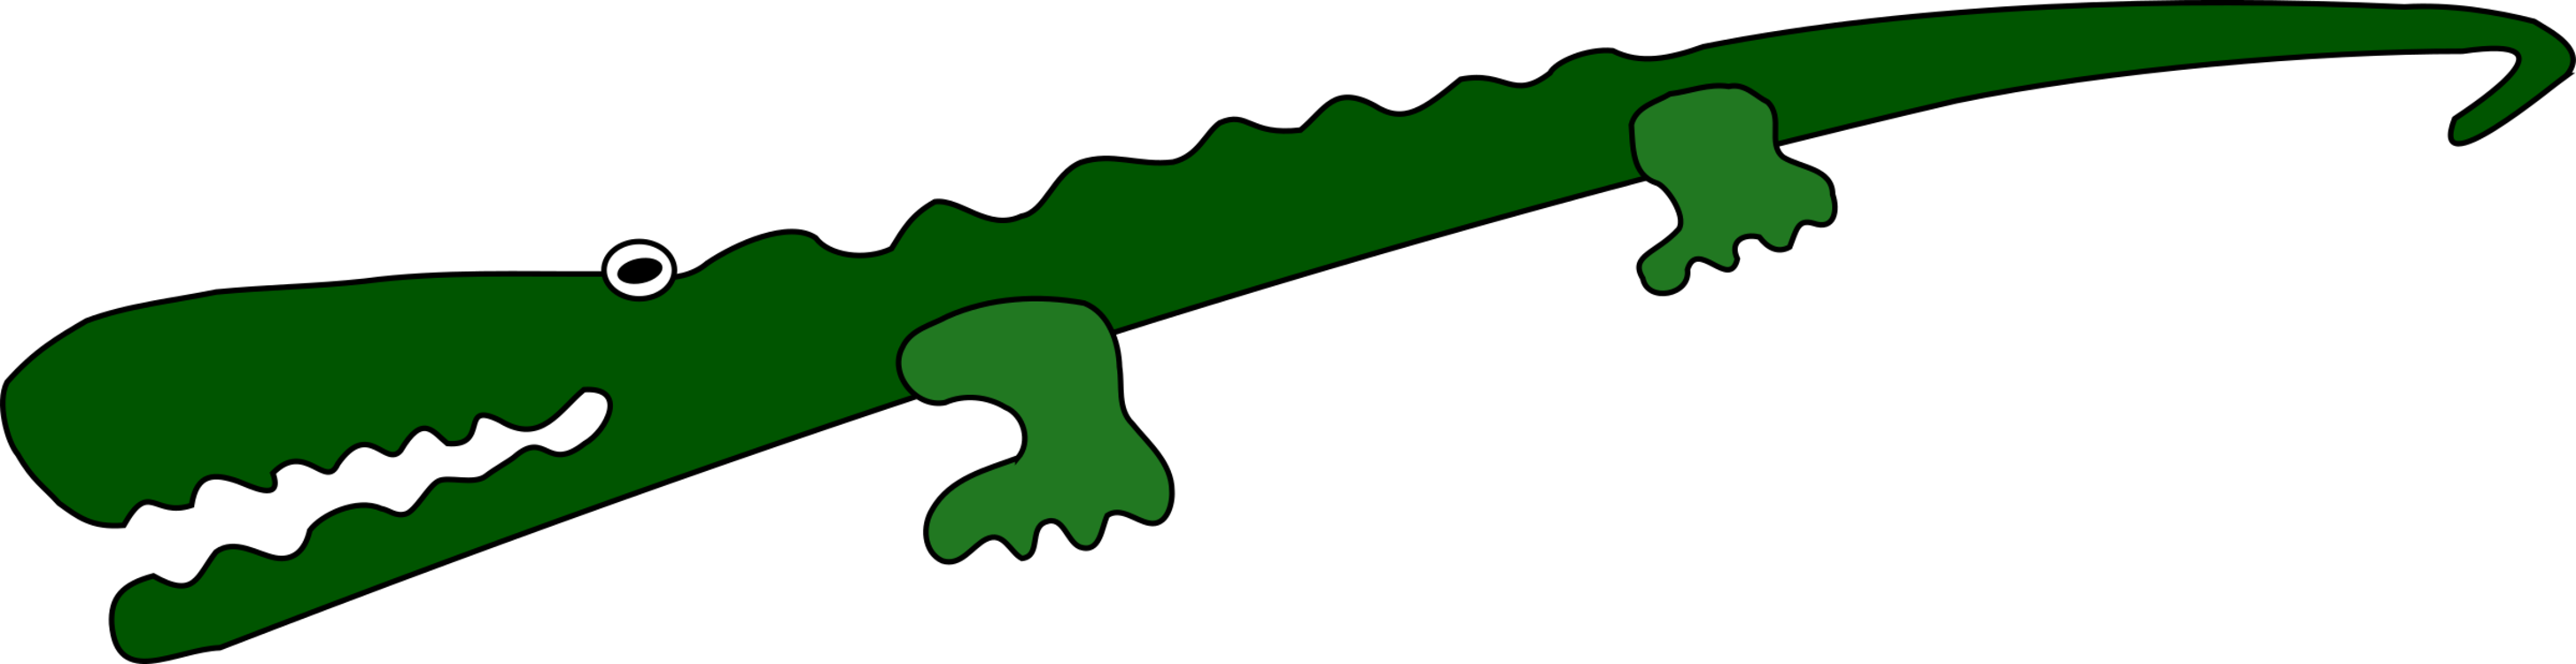 Velociraptor,Reptile,Fictional Character